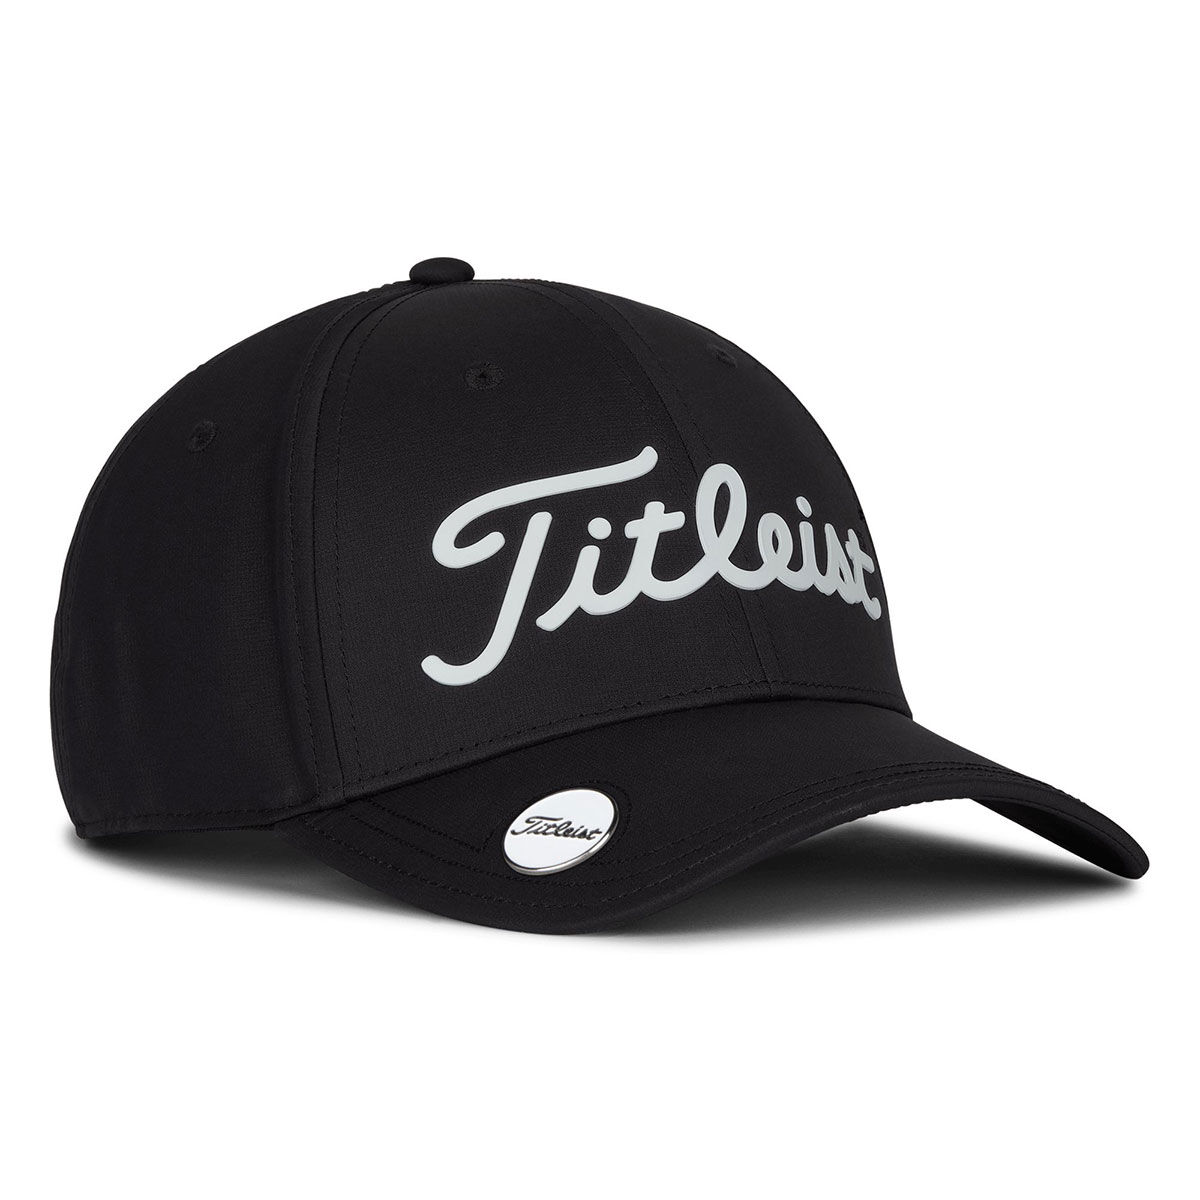 Titleist Ladies Black and White Comfortable Players Performance Ball Marker Golf Cap | American Golf von Titleist